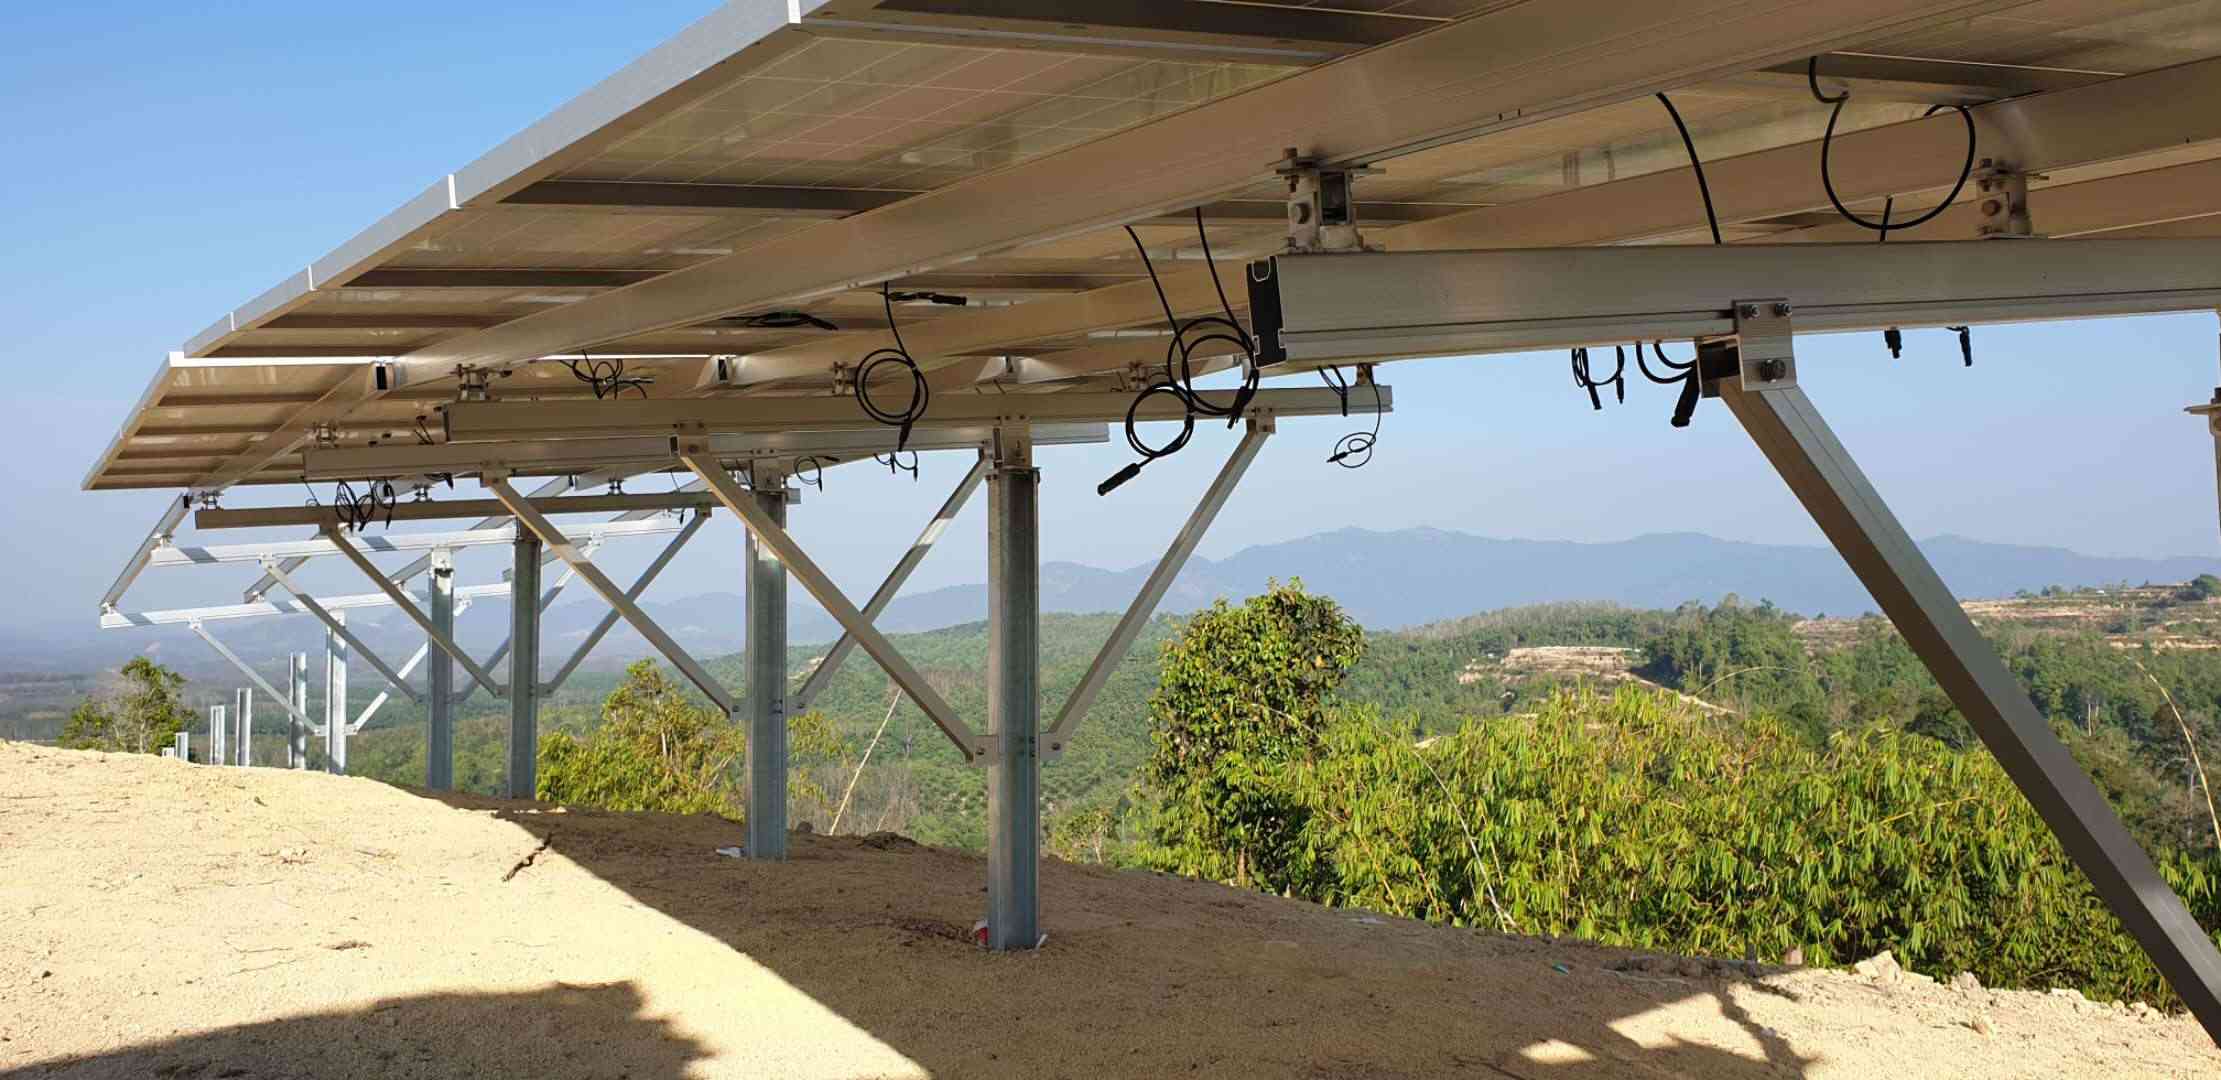  48,9 MWp Pilha C projeto de montagem solar no solo